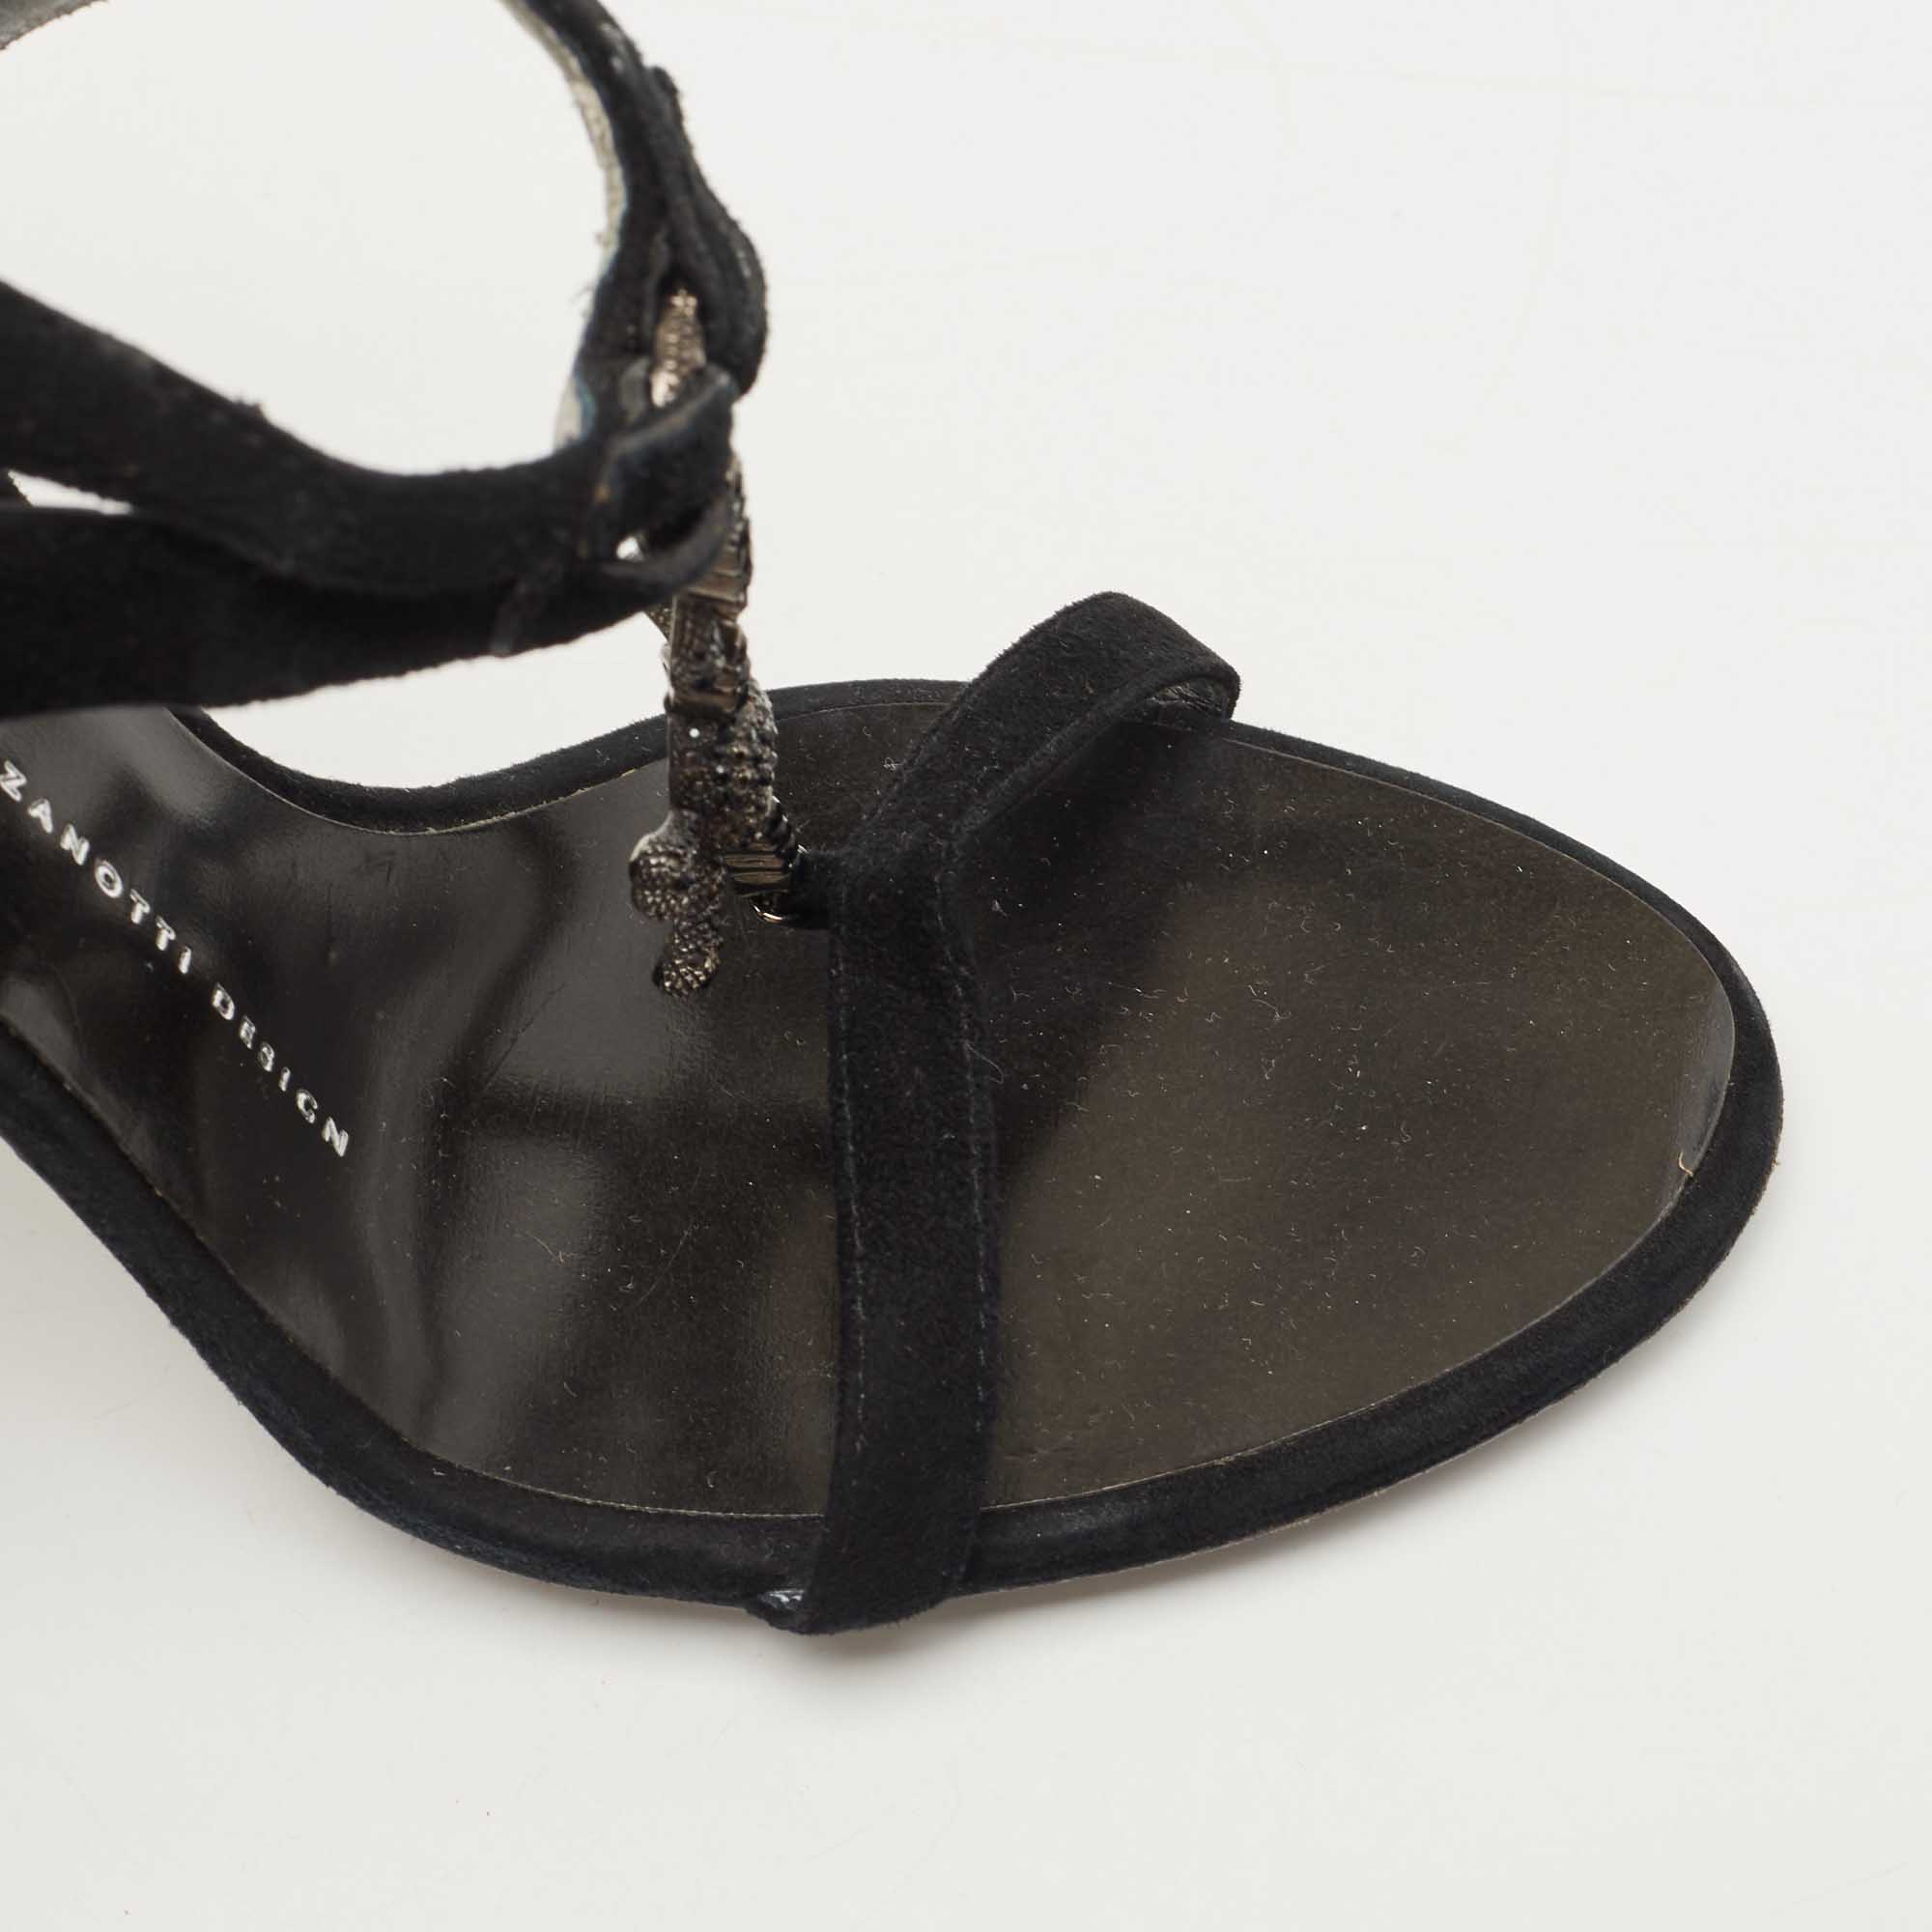 Giuseppe Zanotti Black Suede Crystal Embellished T-Strap Sandals Size 37